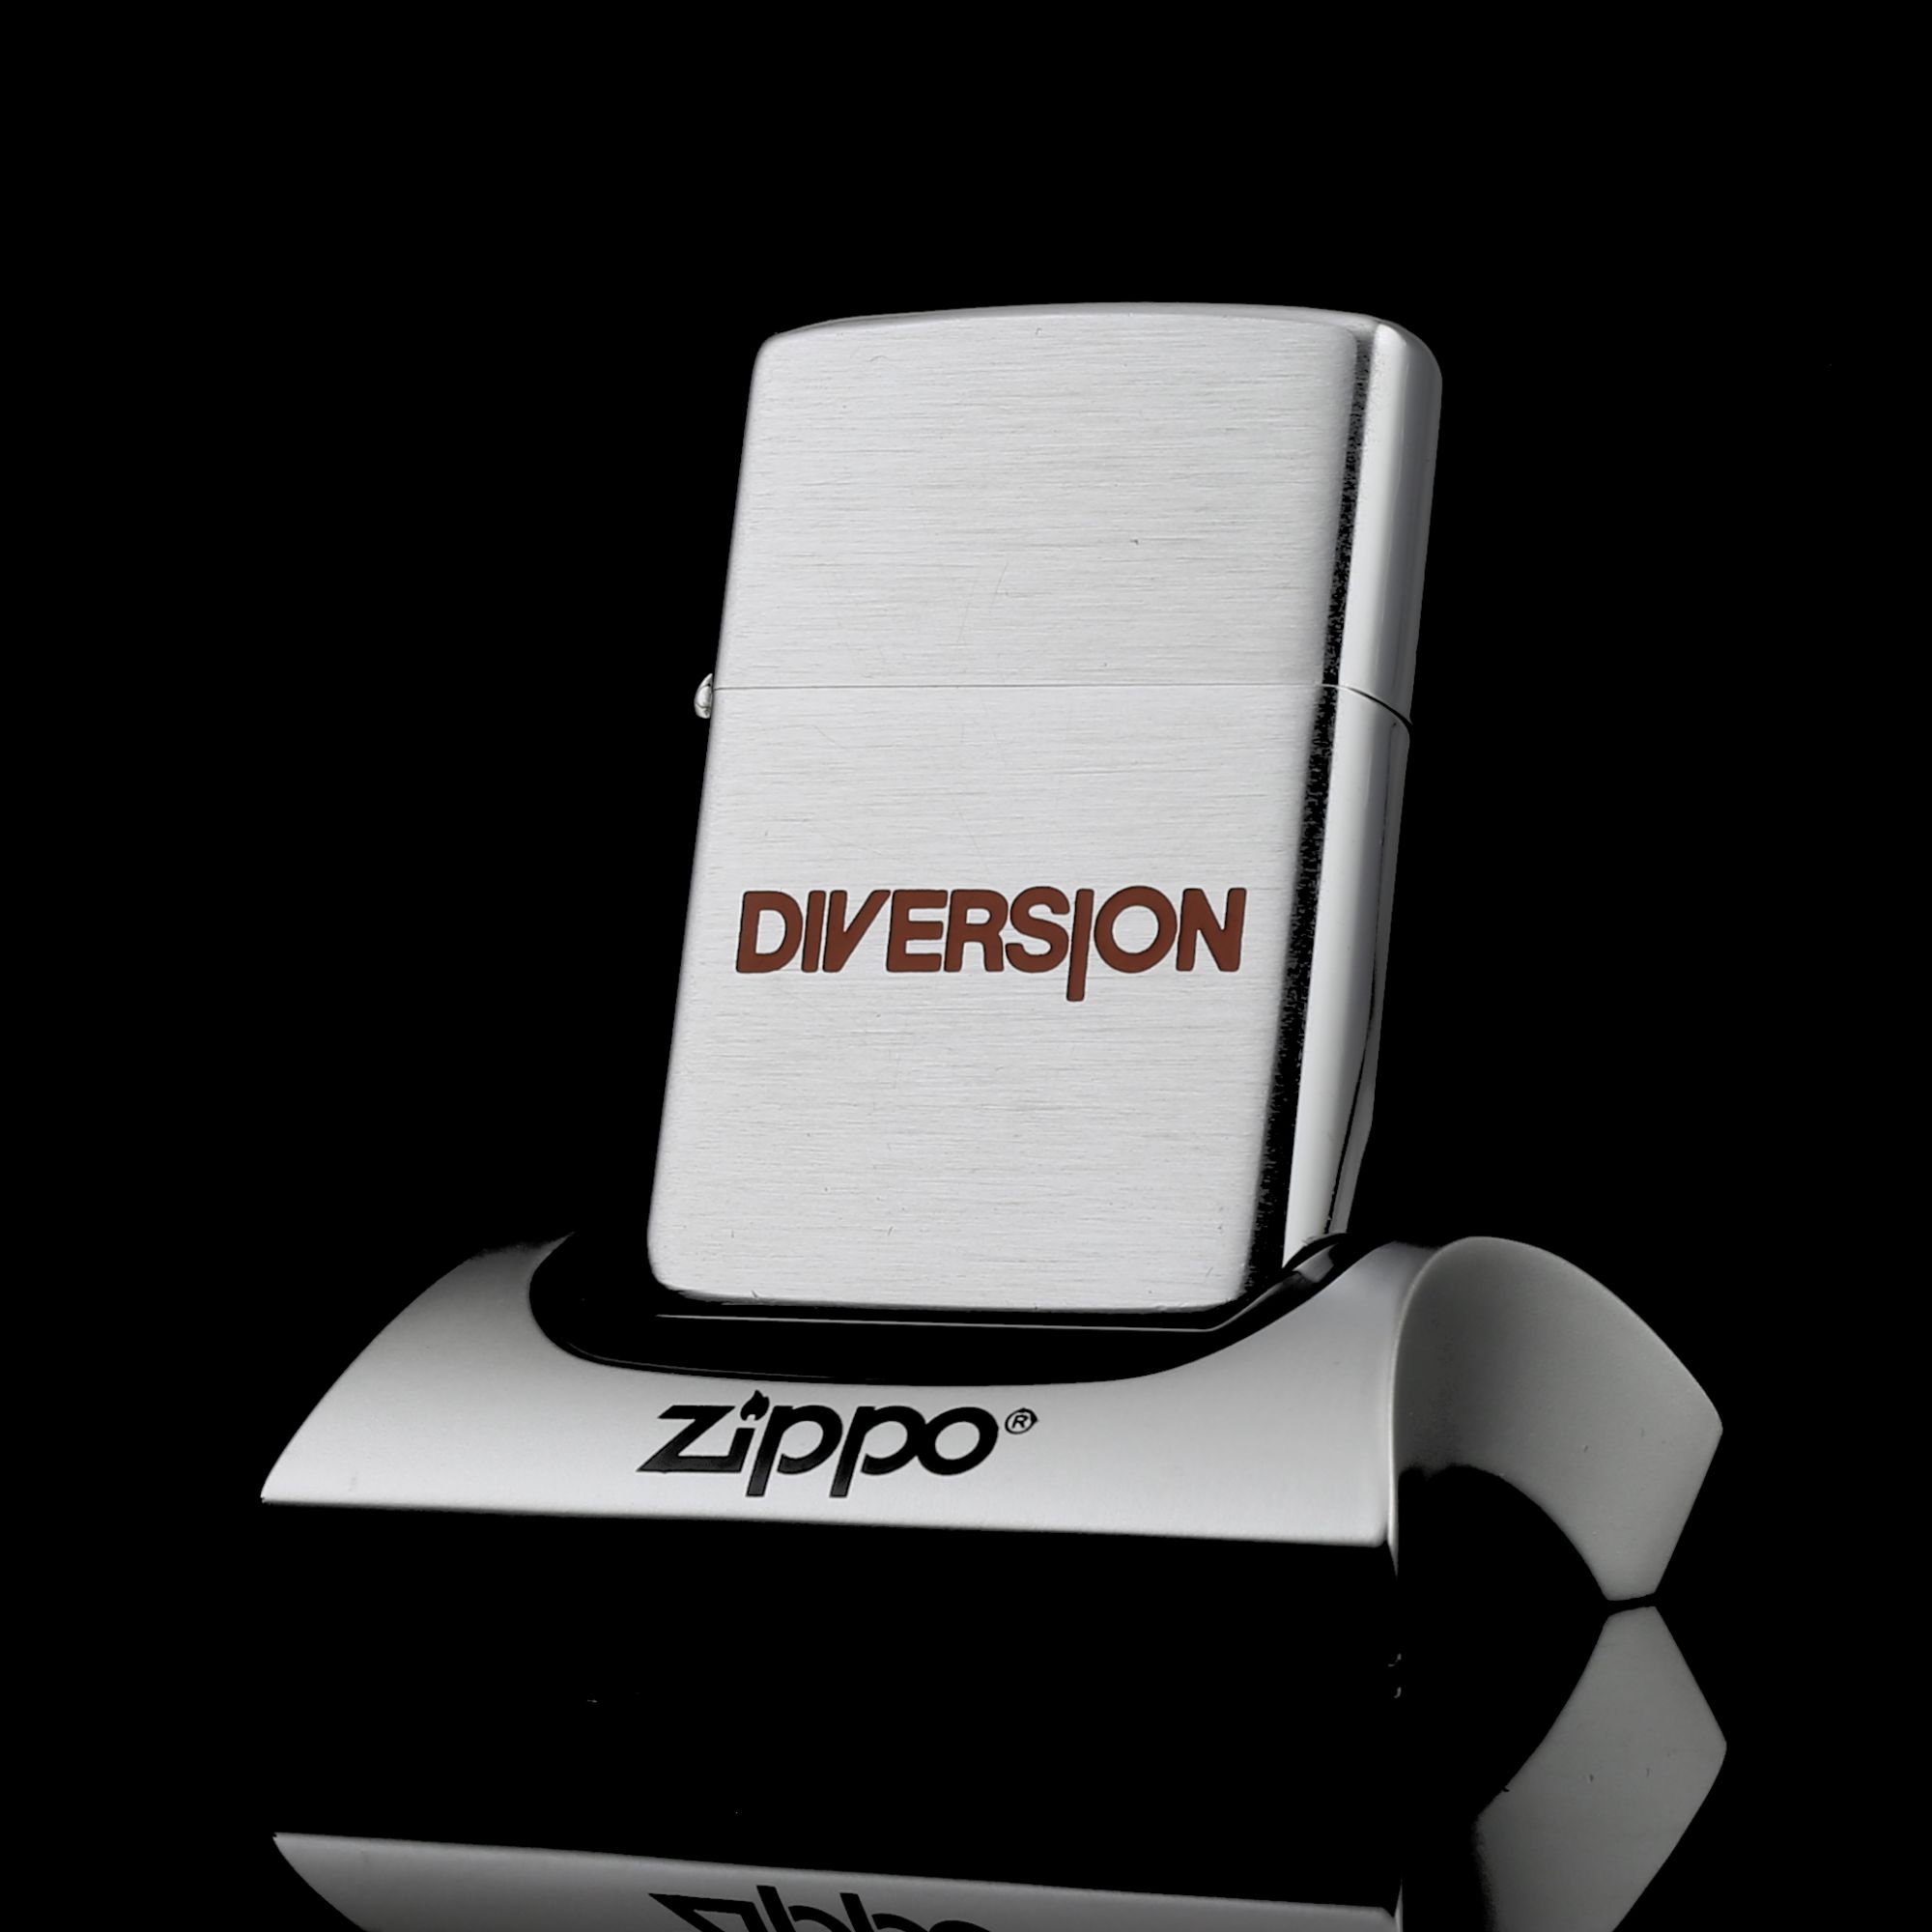 Zippo-DIVERSION-1973-zippo-co-quy-hiem-mac-tien-nhat-the-gioi-mau-do-red